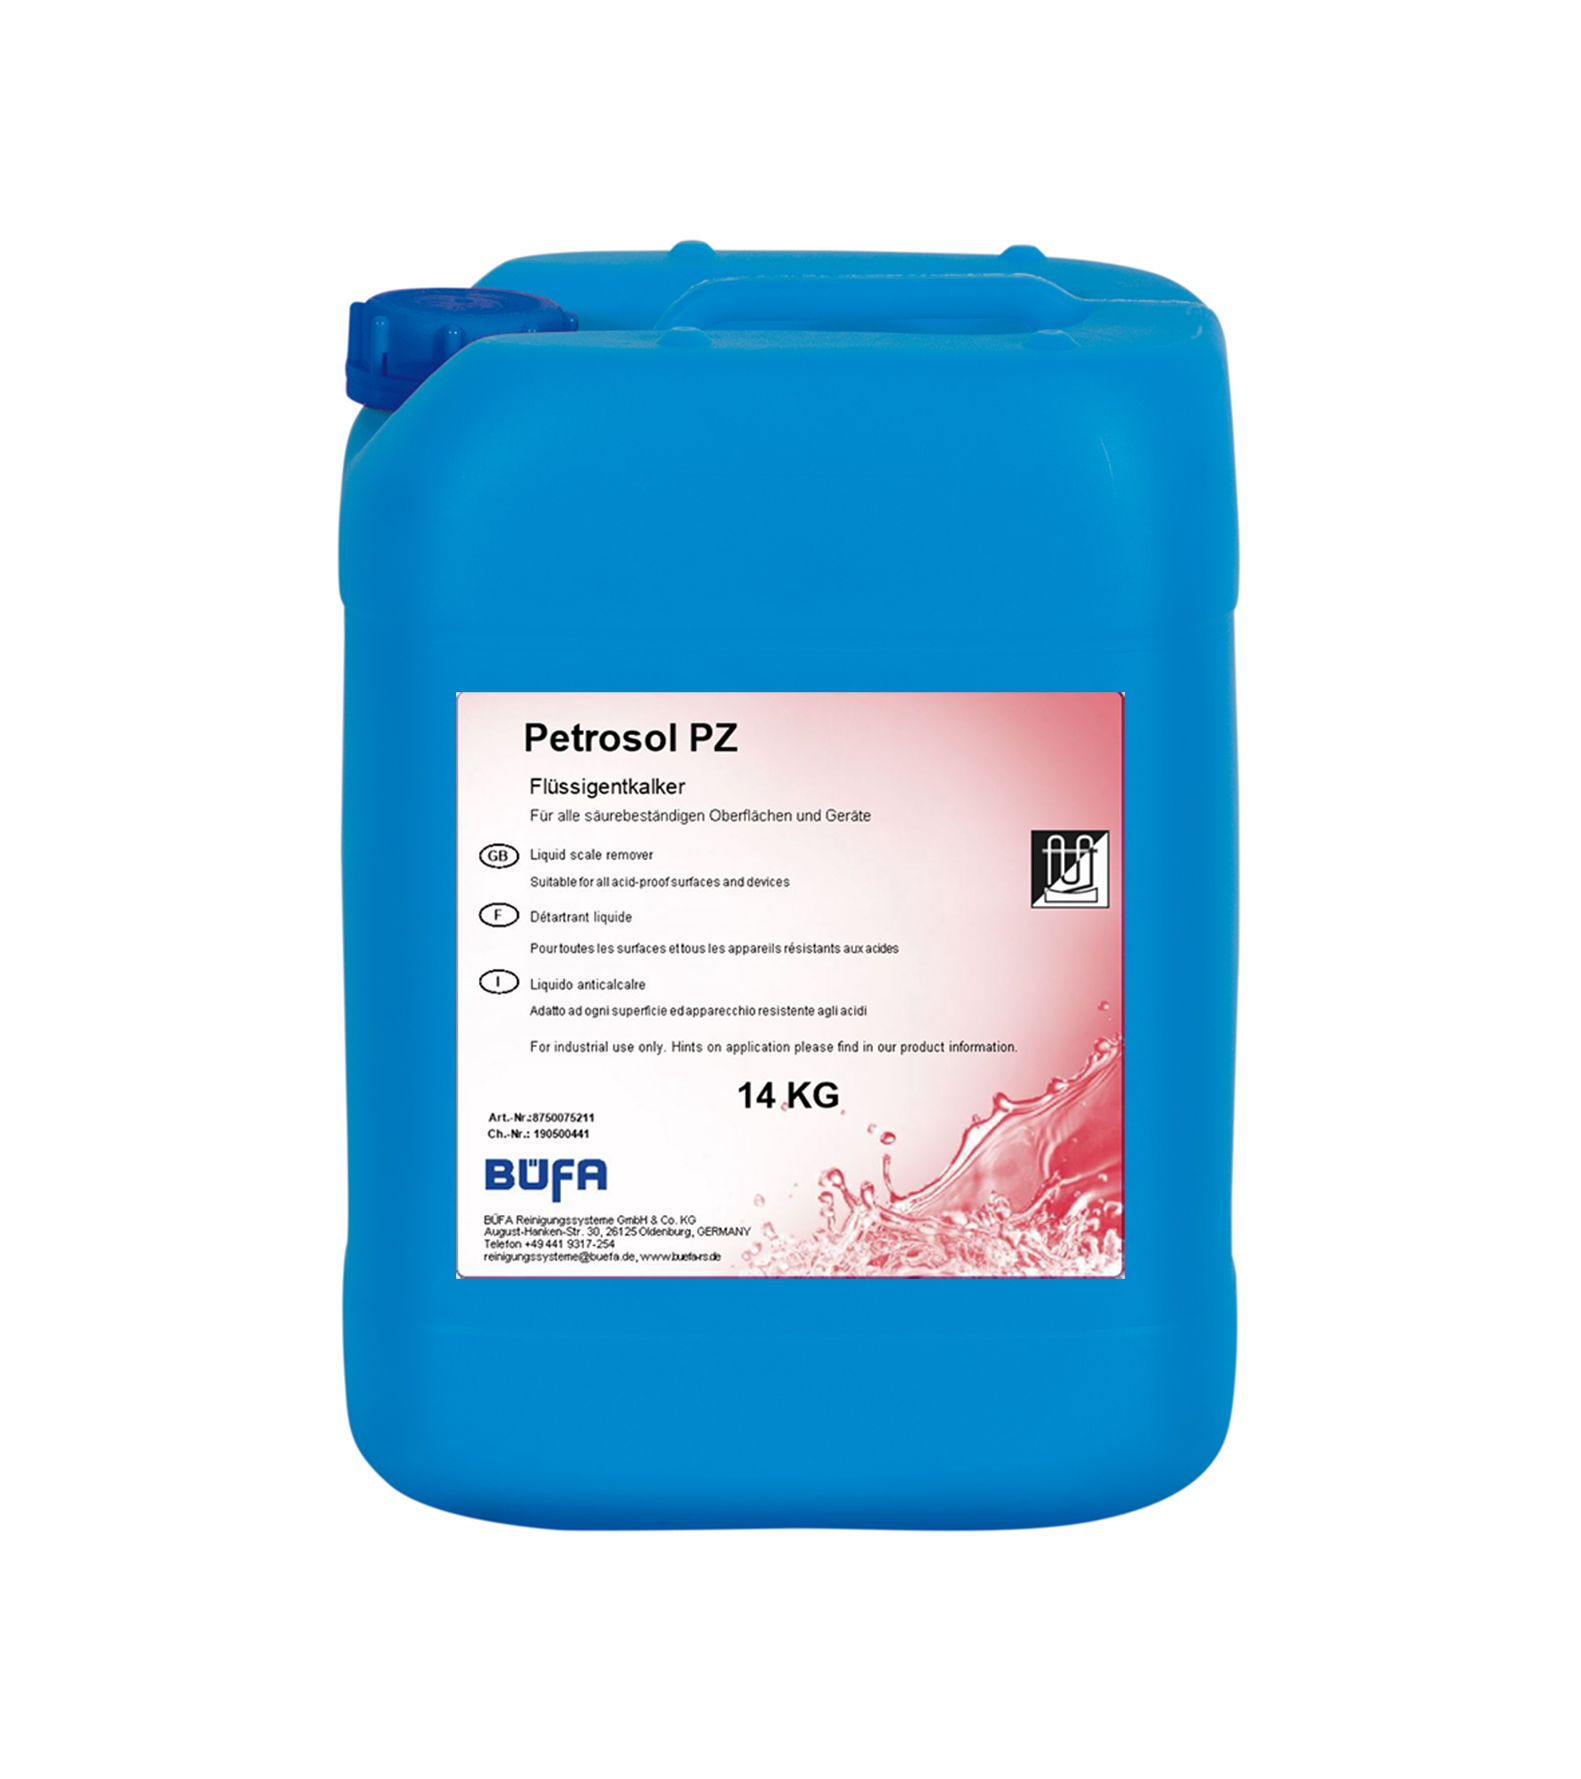 Petrosol PZ: Flüssigentkalker 1.4 KG - BÜFA